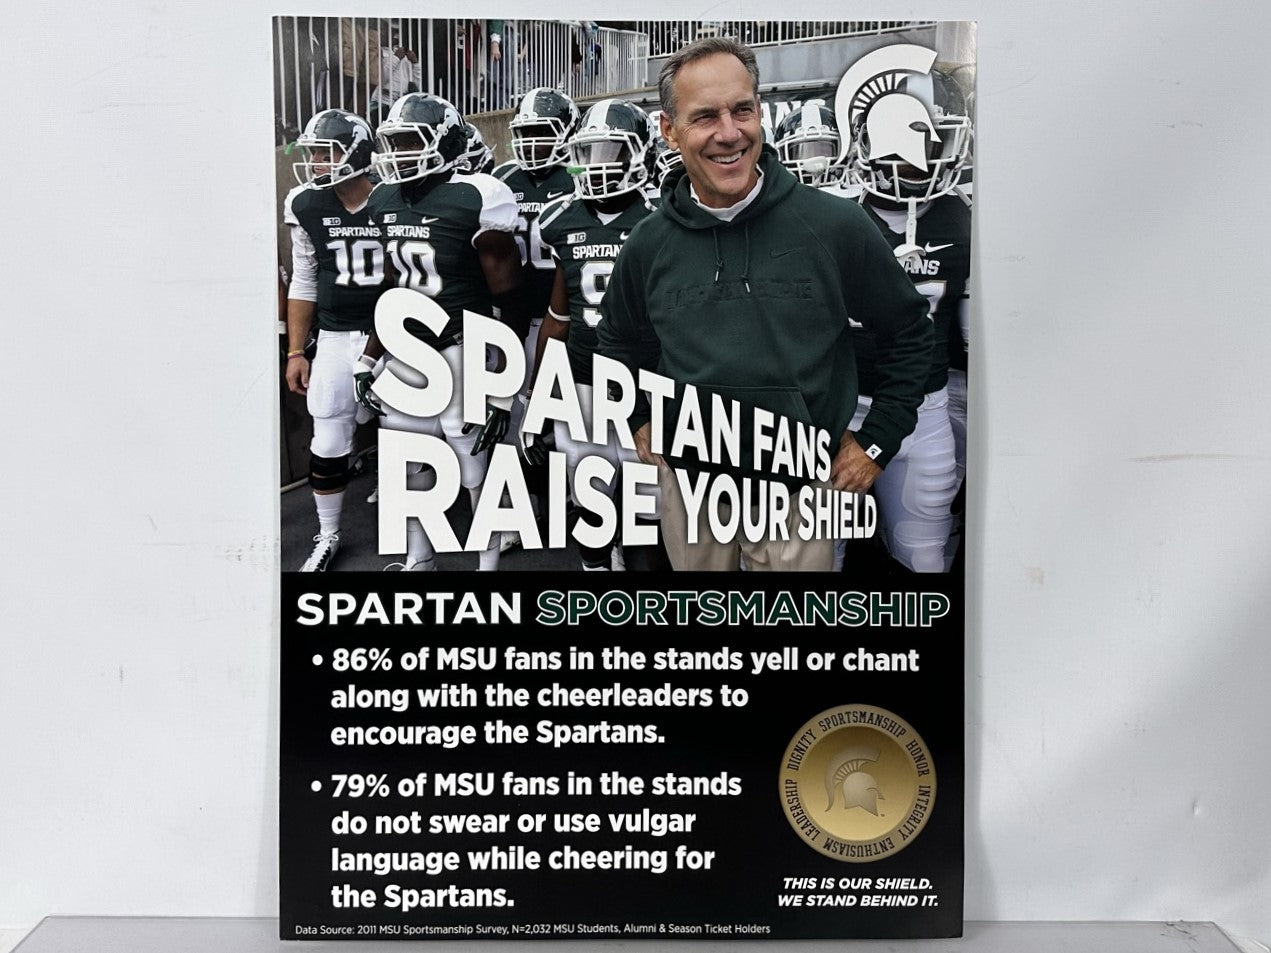 Spartan Sportsmanship Raise Your Shield Football Poster (B)